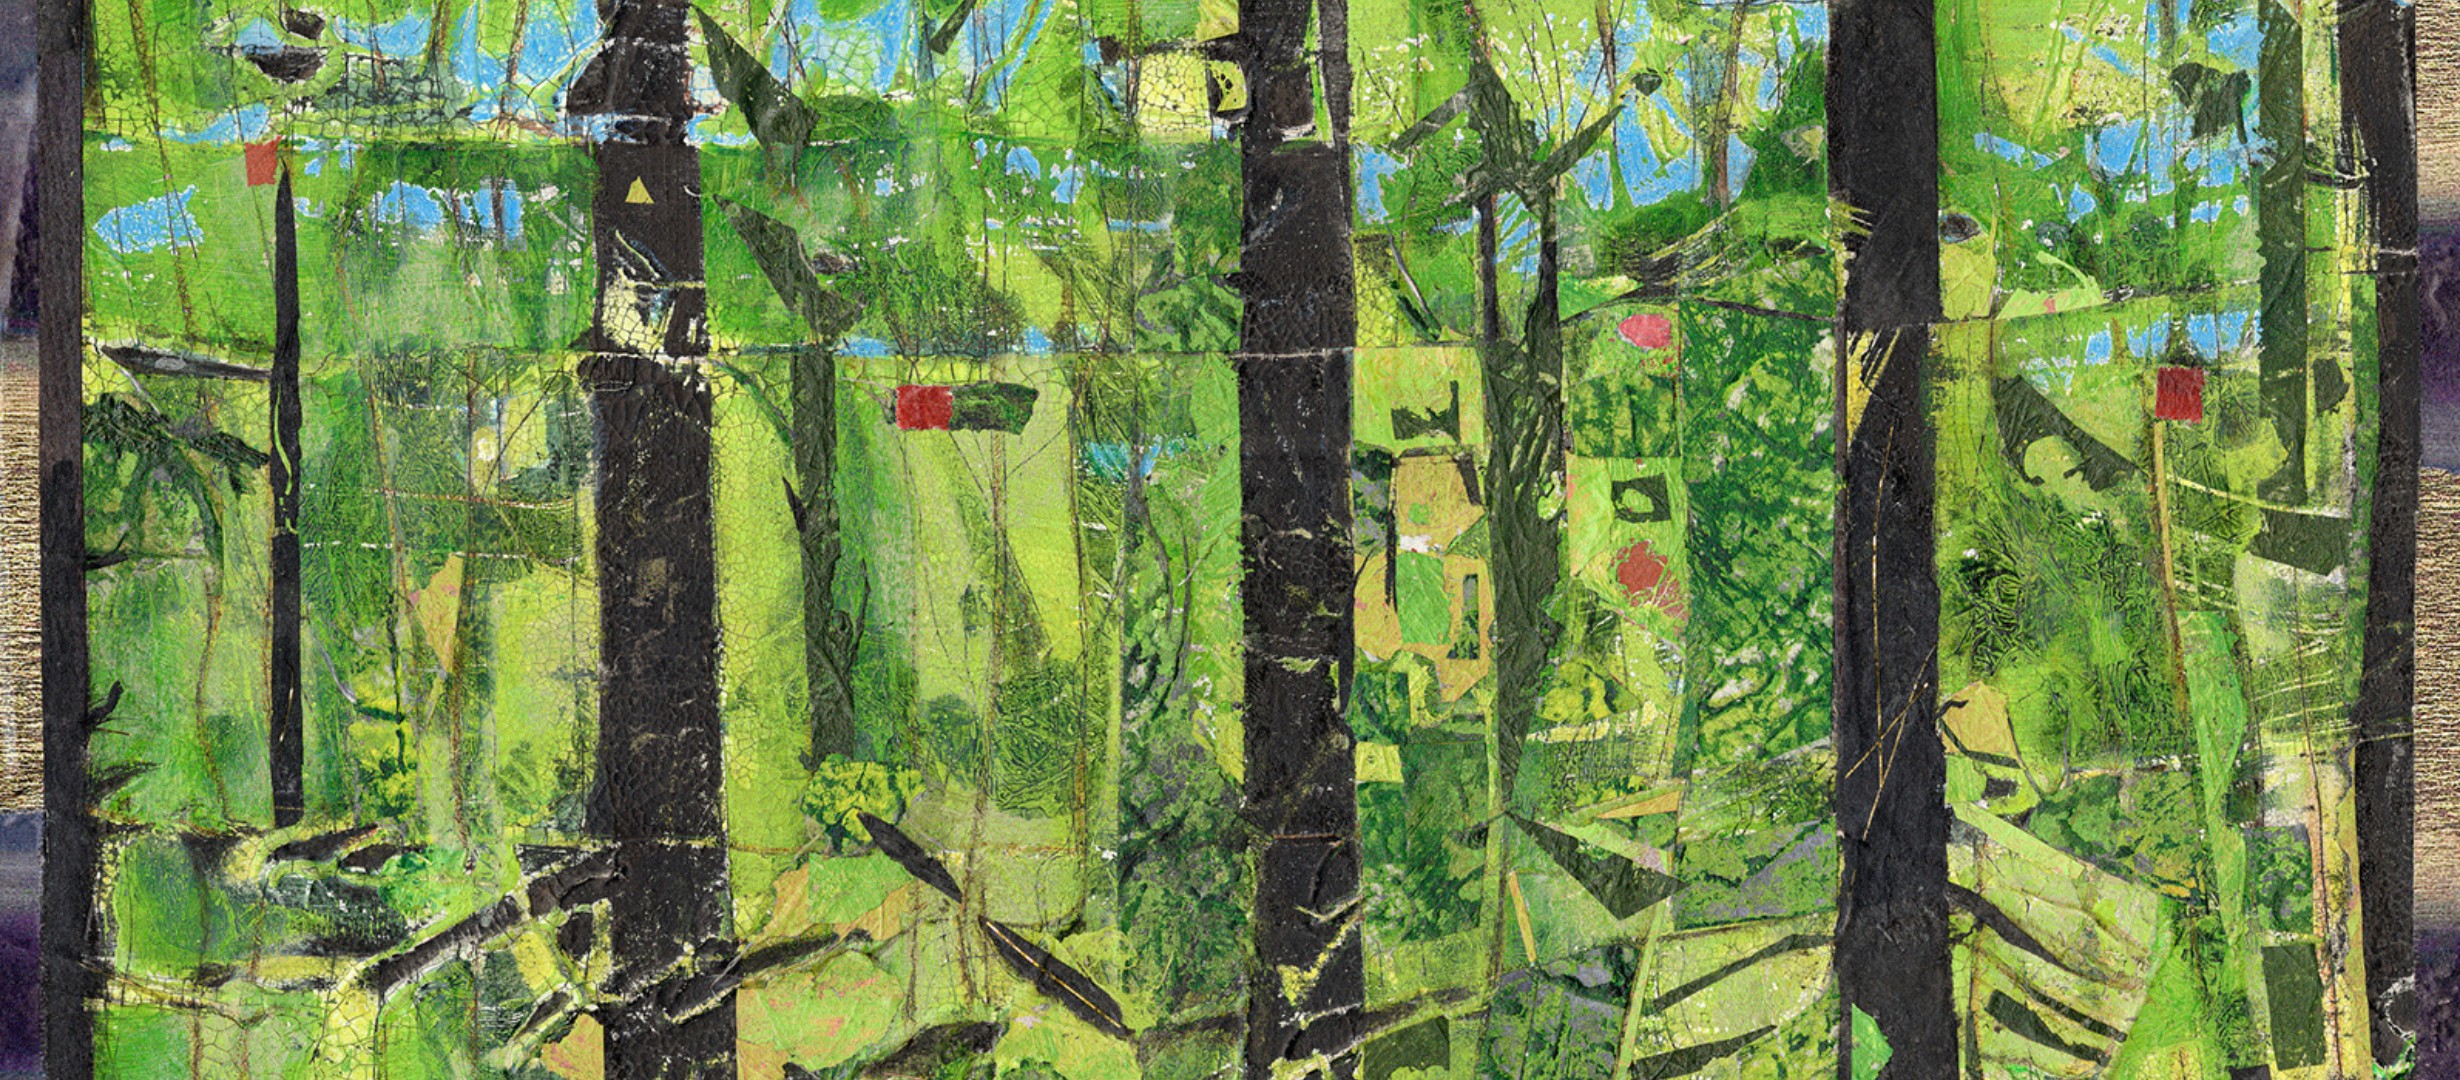 Mutimedia artwork of green trees